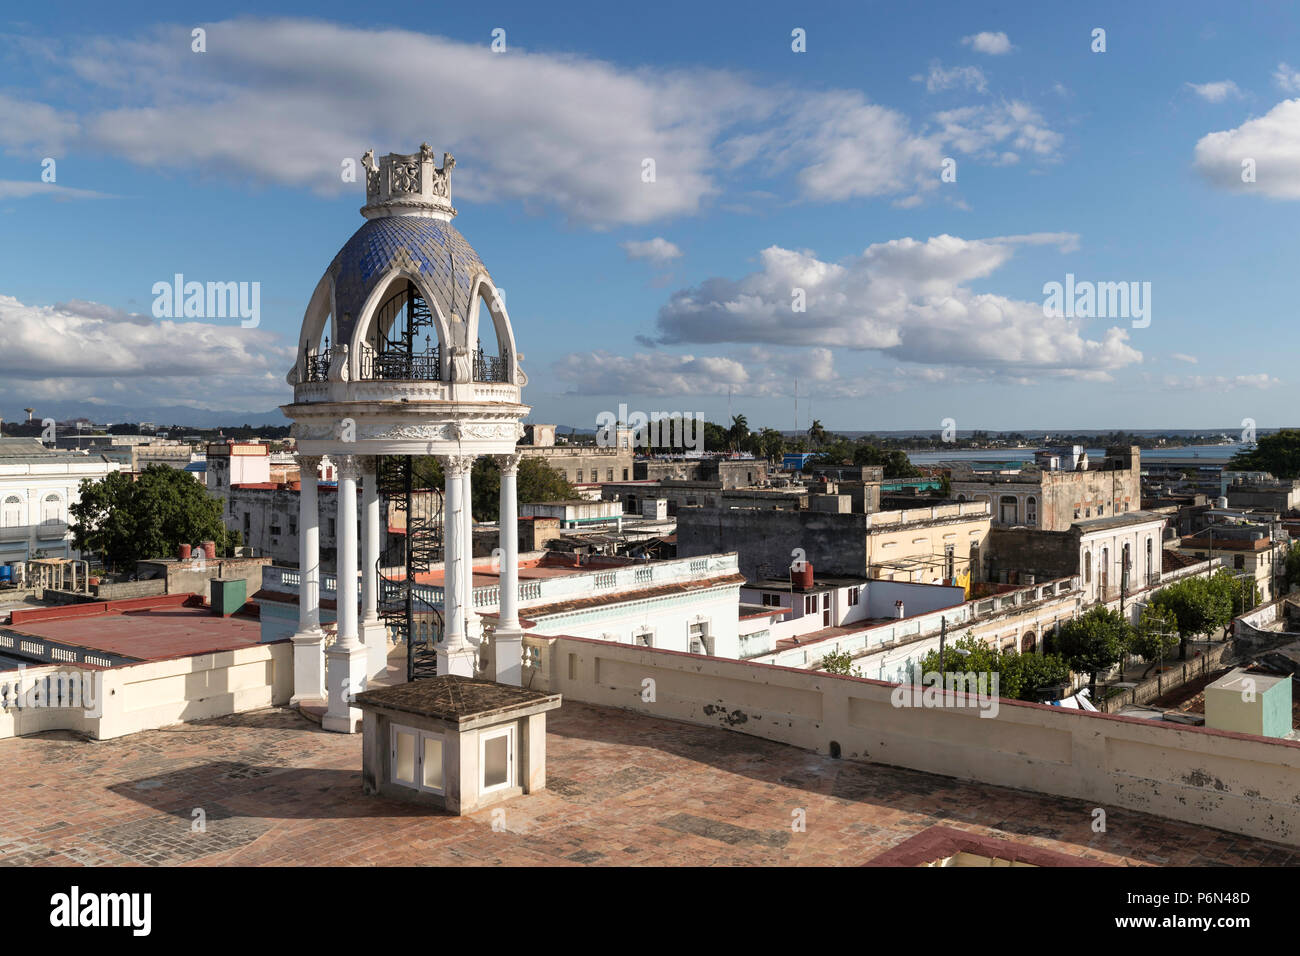 Tower on the roof of the Casa de Cultura in the Palacio Ferrer, Cienfuegos, Cuba. Stock Photo